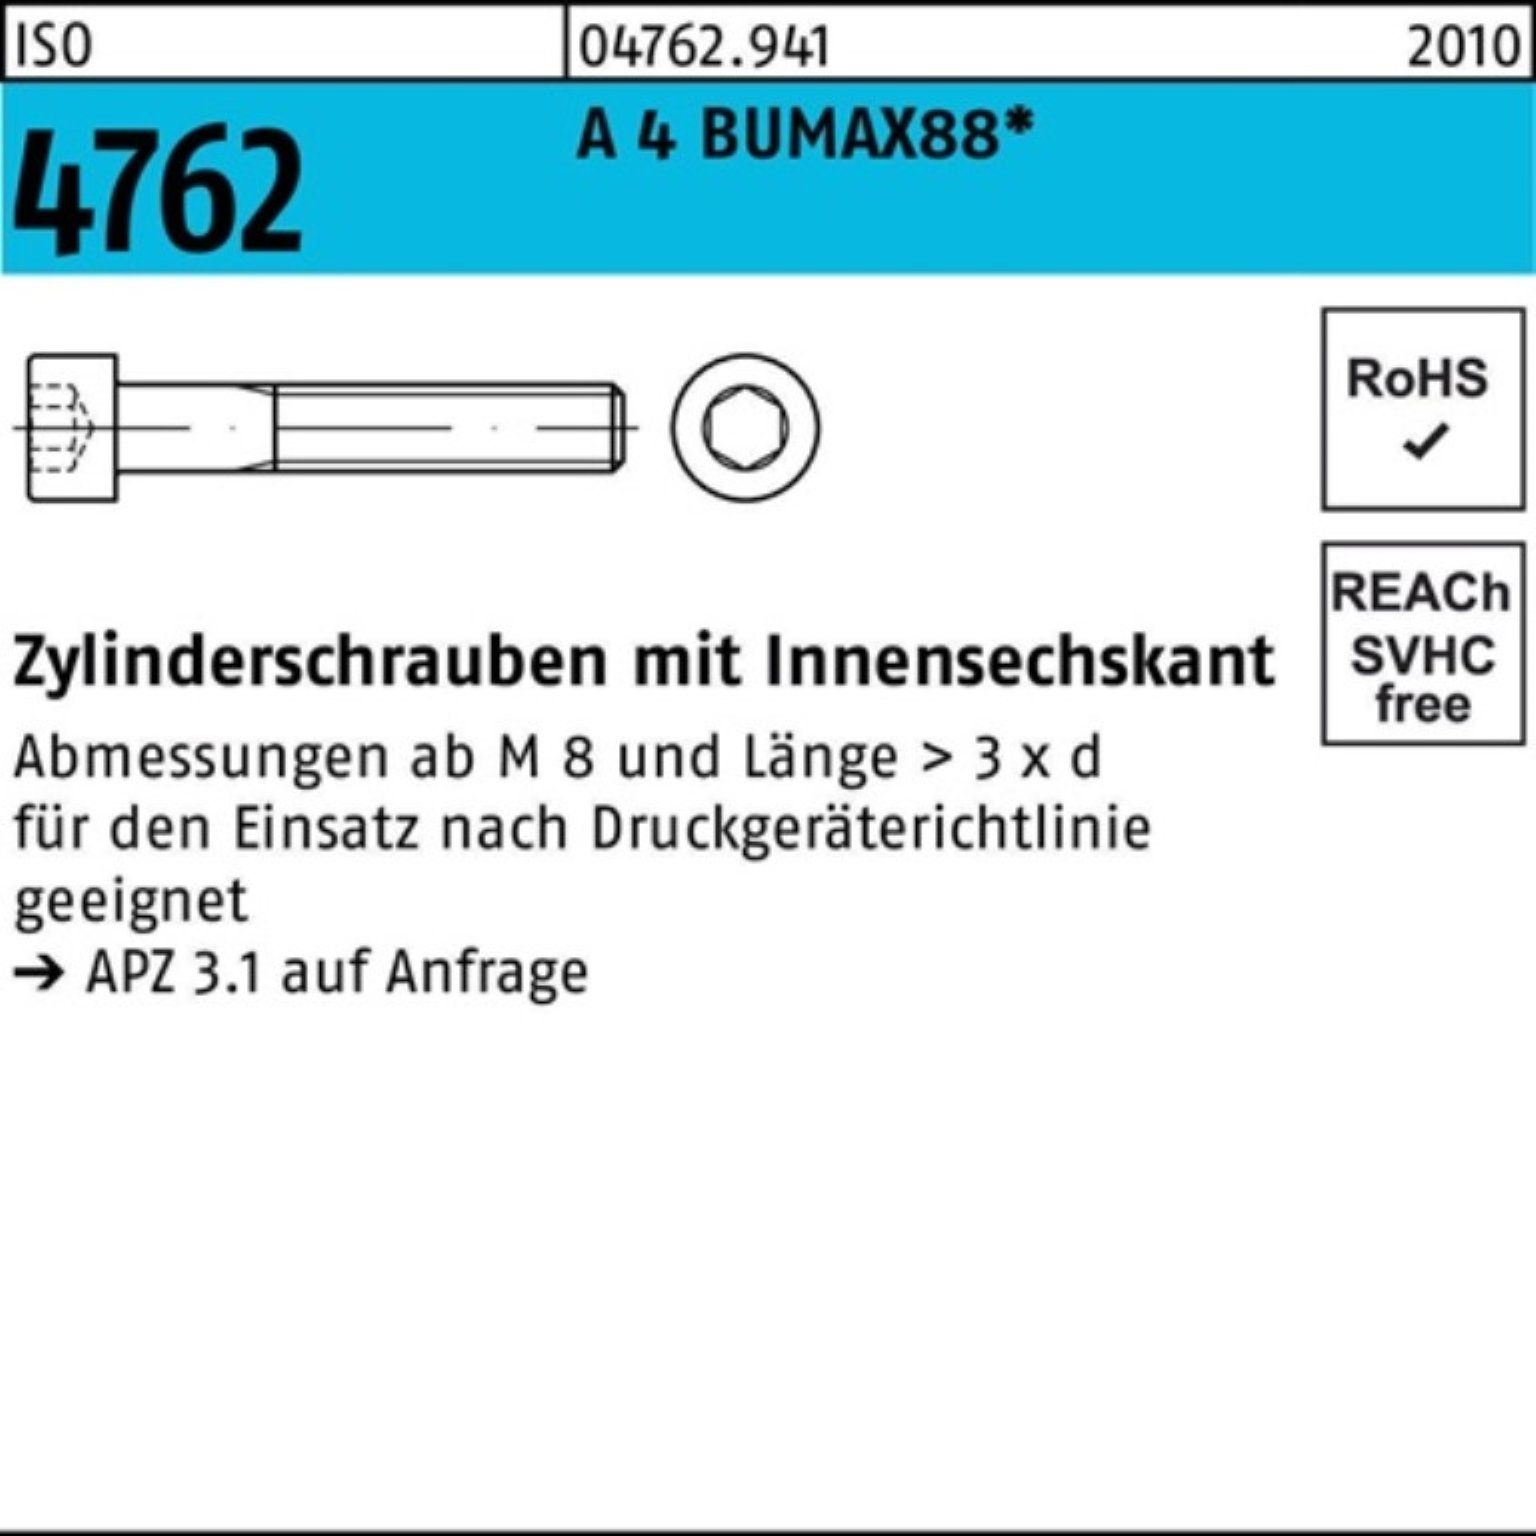 Bufab Zylinderschraube 200er Pack Zylinderschraube ISO 4762 Innen-6kt M4x 8 A 4 BUMAX88 200 S